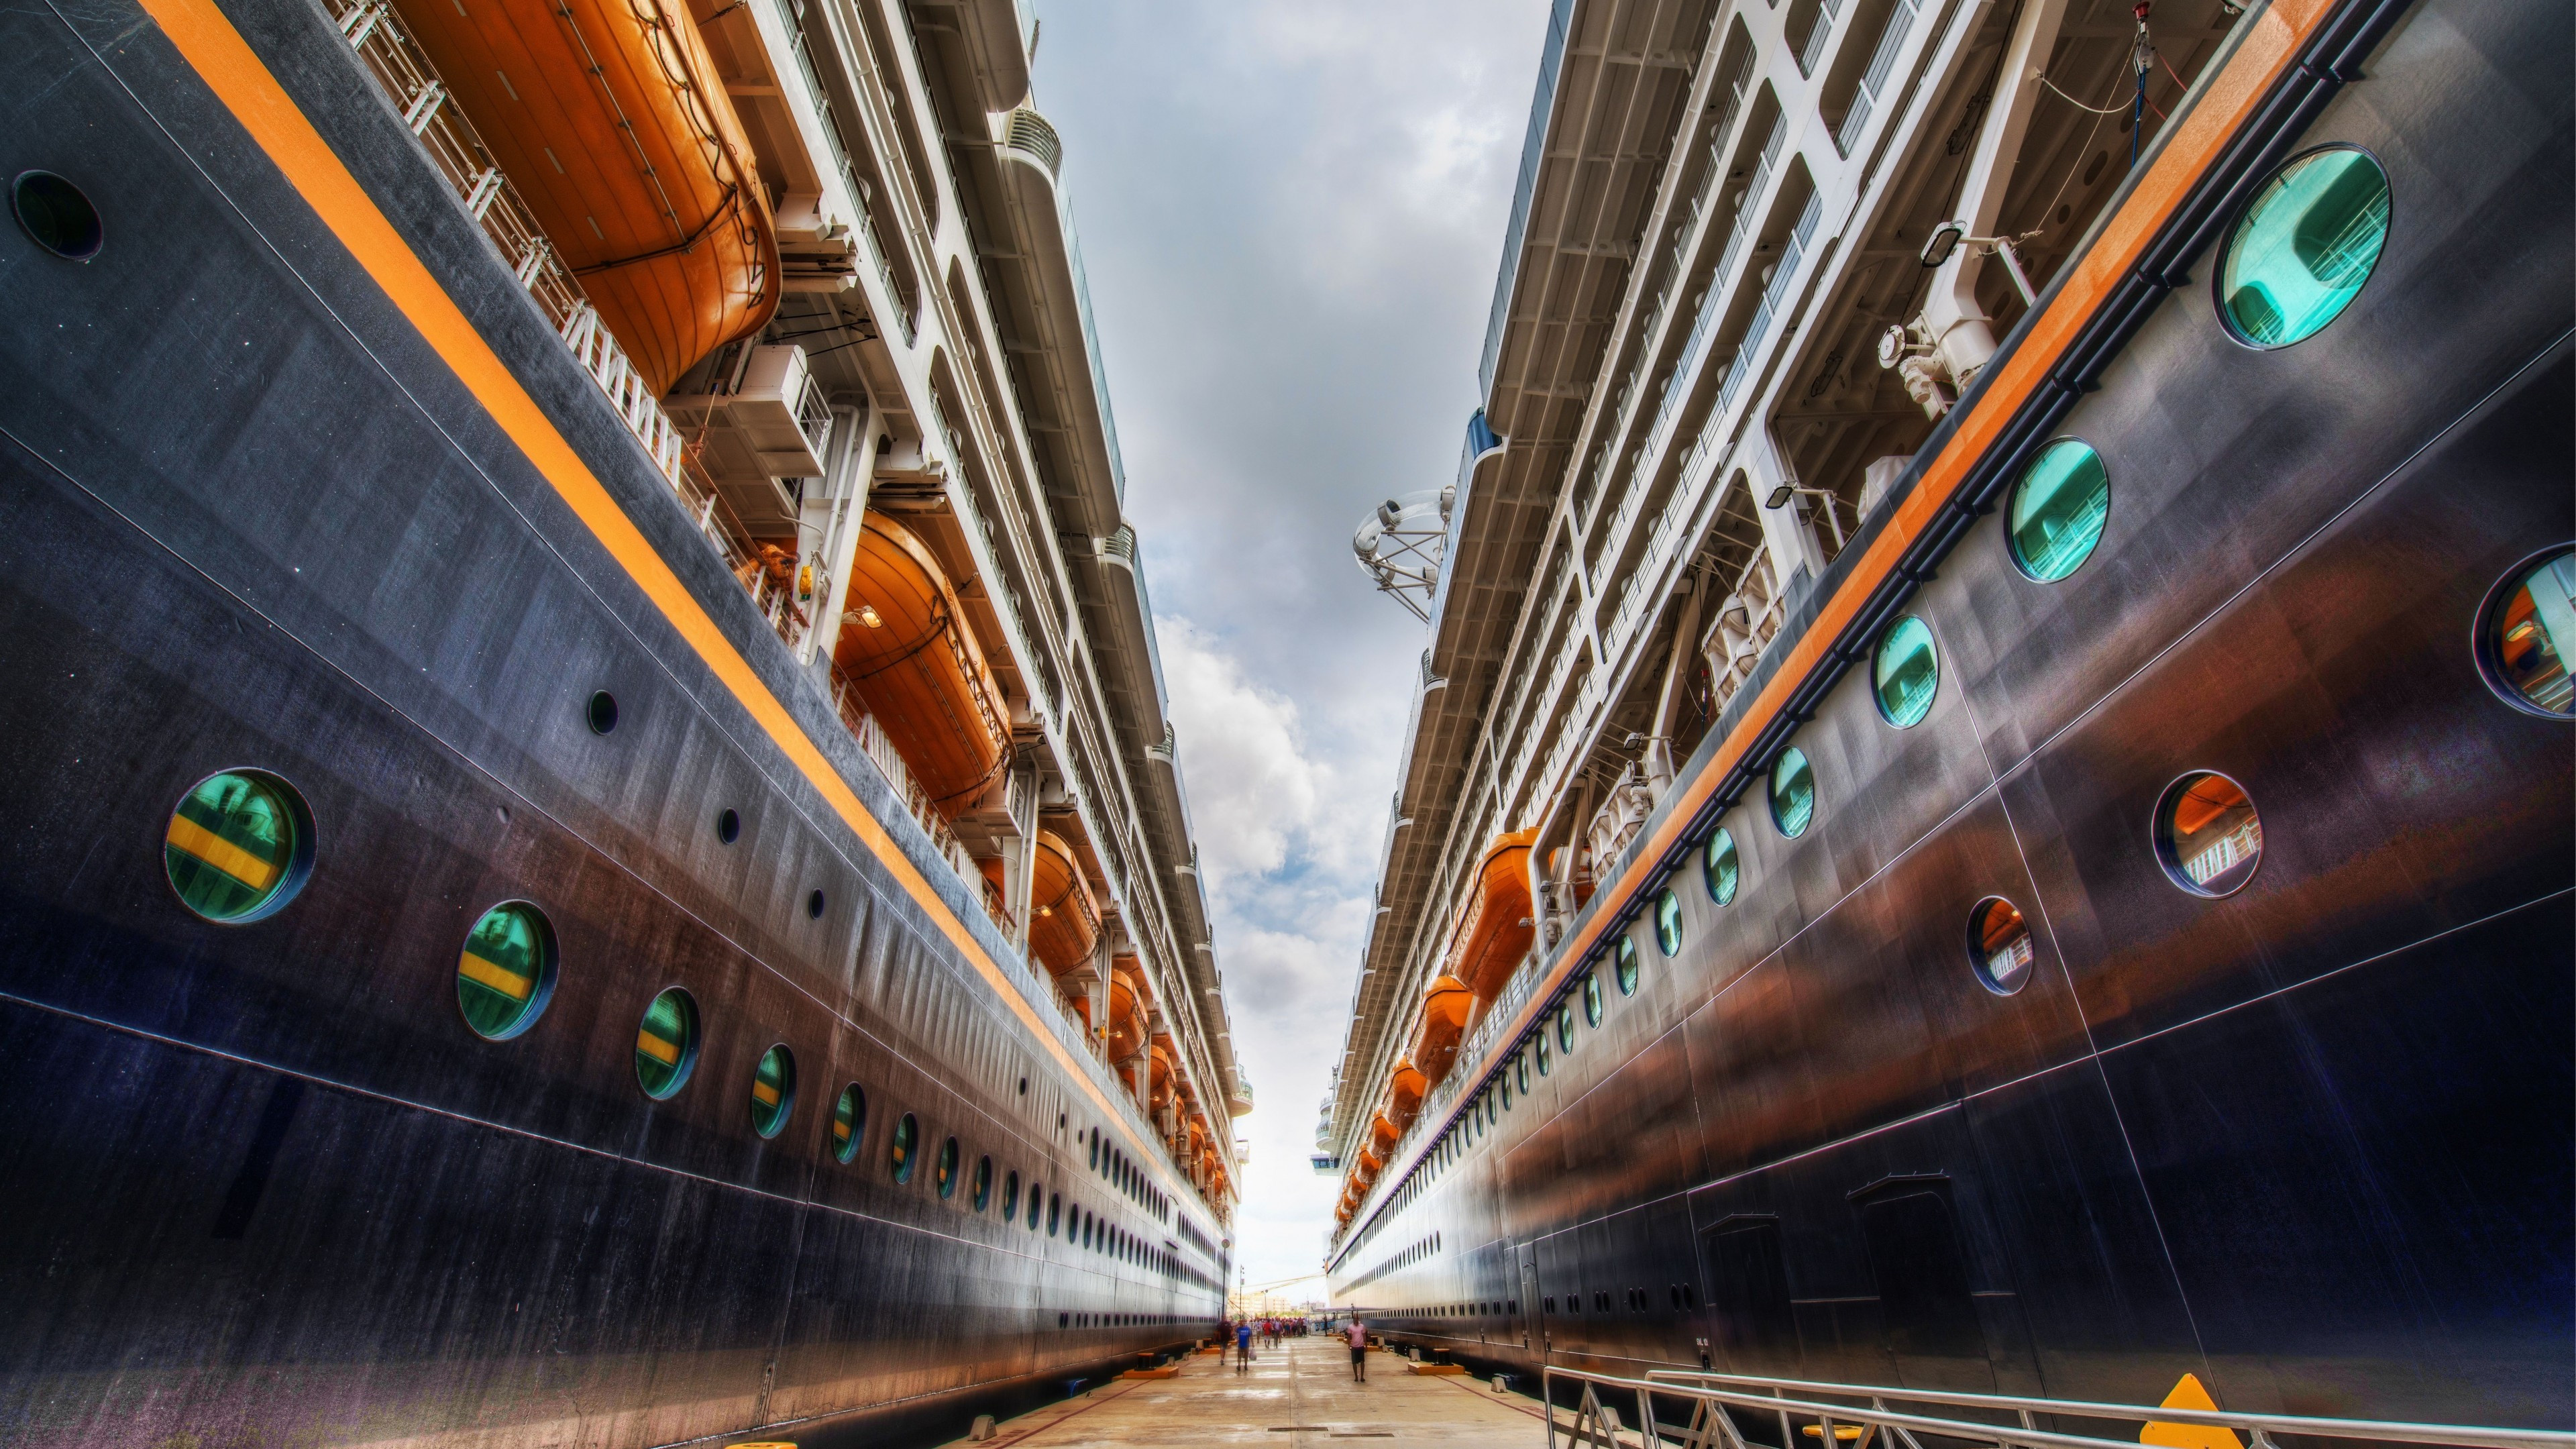 Cruise ship art, Port worm view, Unforgettable voyages, Oceanic splendor, 3840x2160 4K Desktop